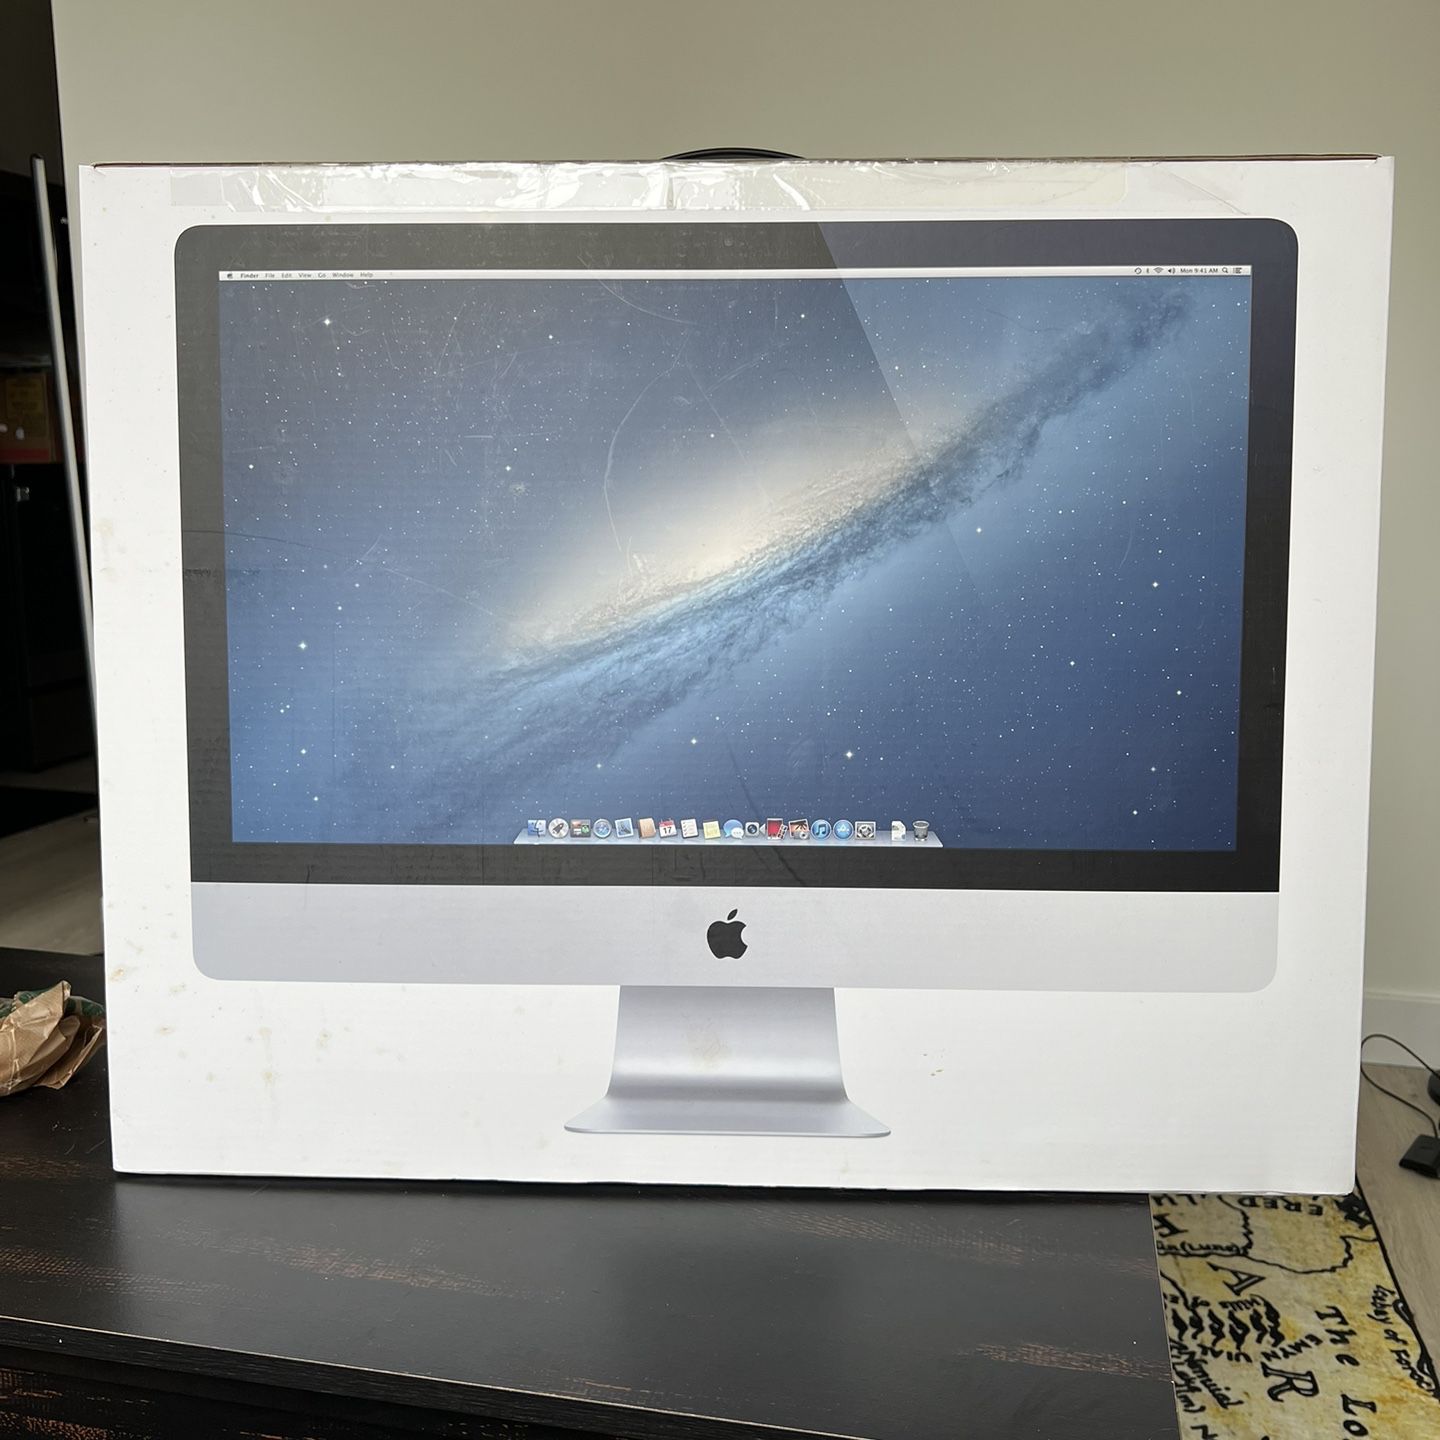 Like New 27-inch iMac For Sale w/ Original Box